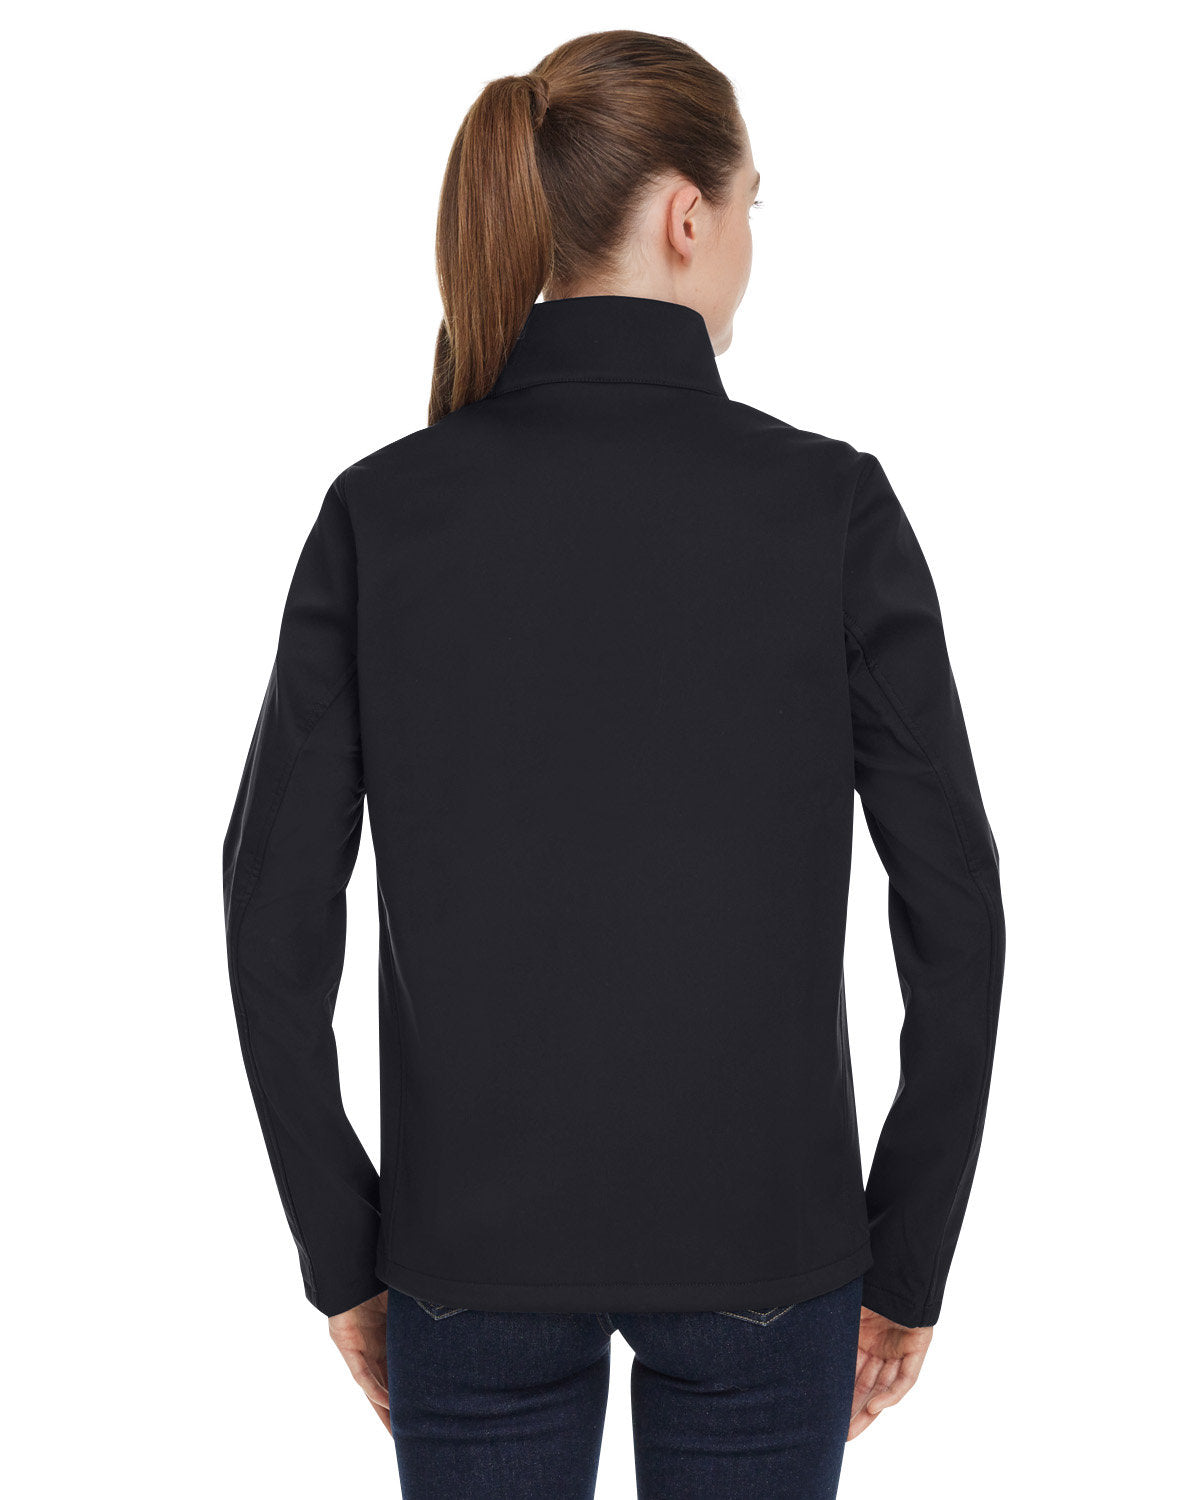 Branded Under Armour Ladies Infrared Shield 2.0 Jacket Black/Grey